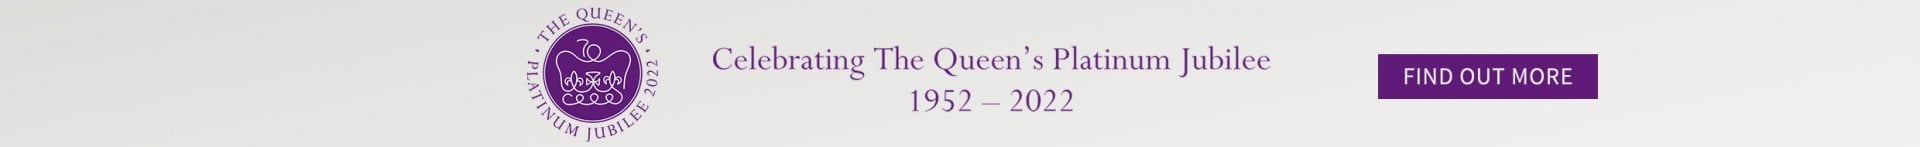 Celebrating The Queen's Platinum Jubilee